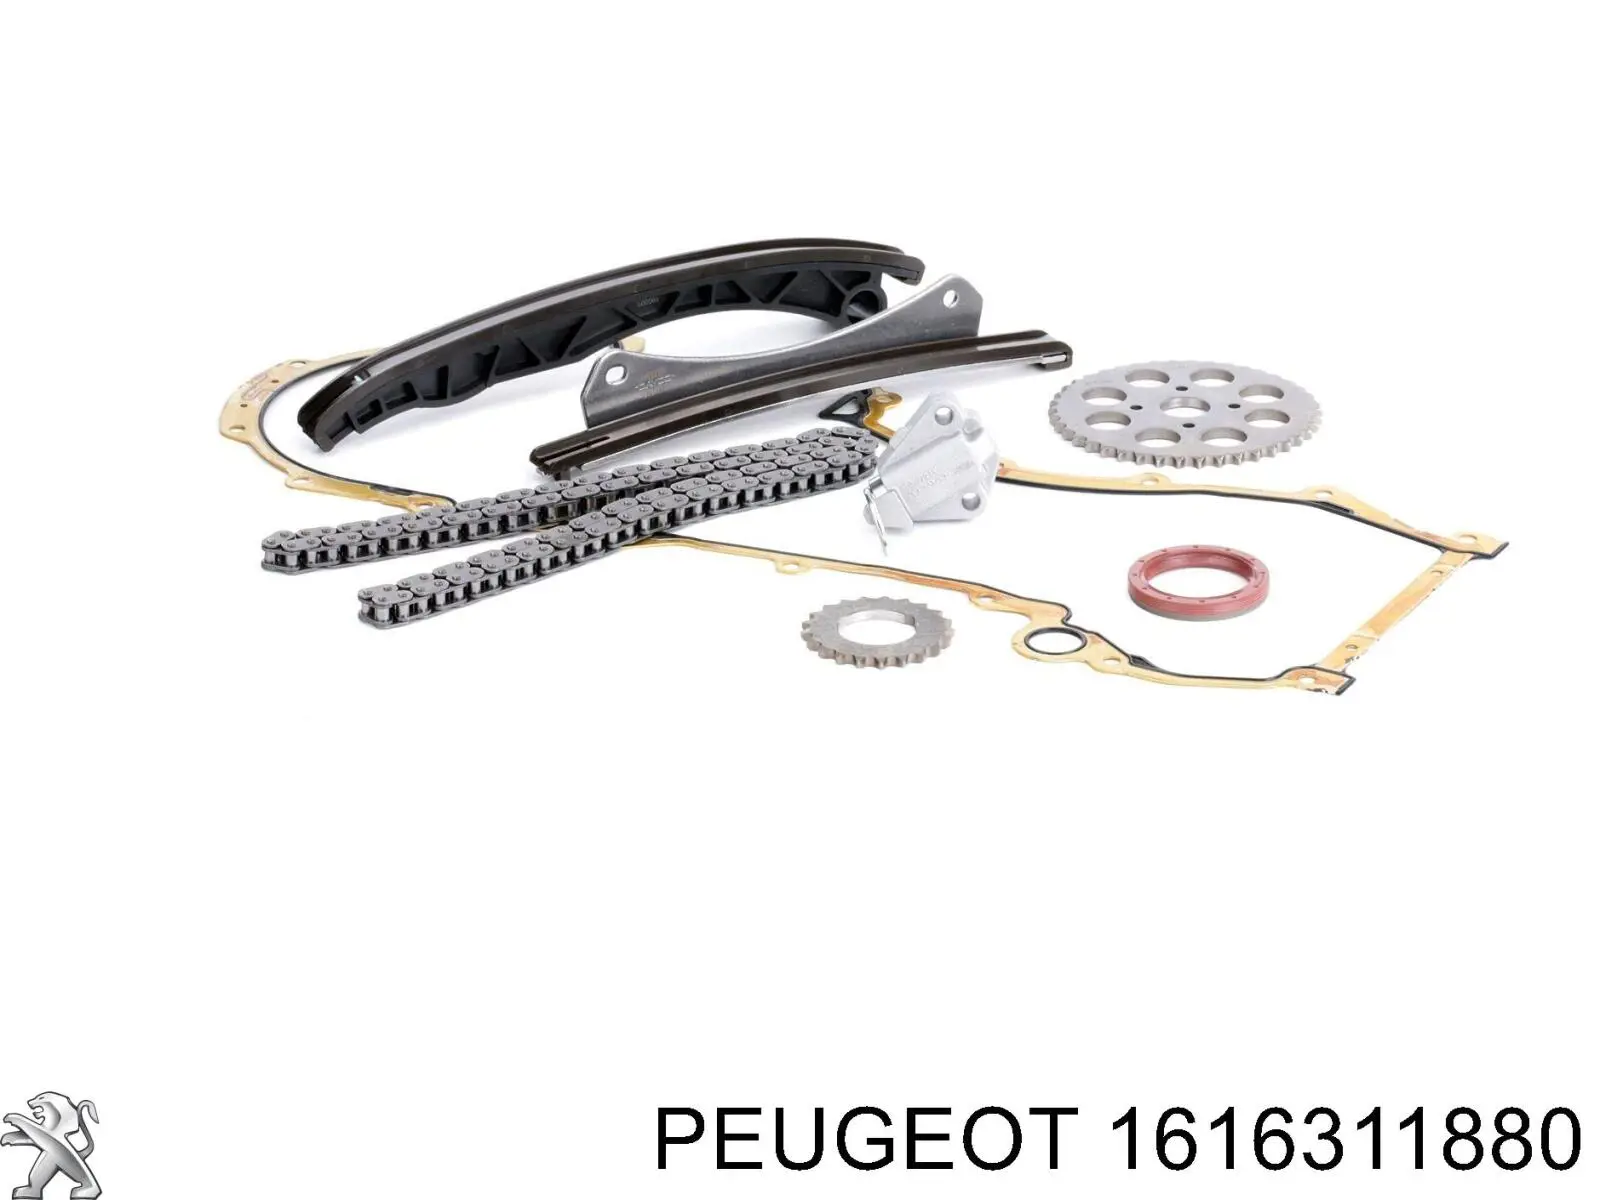 1616311880 Peugeot/Citroen kit de cadenas de distribución